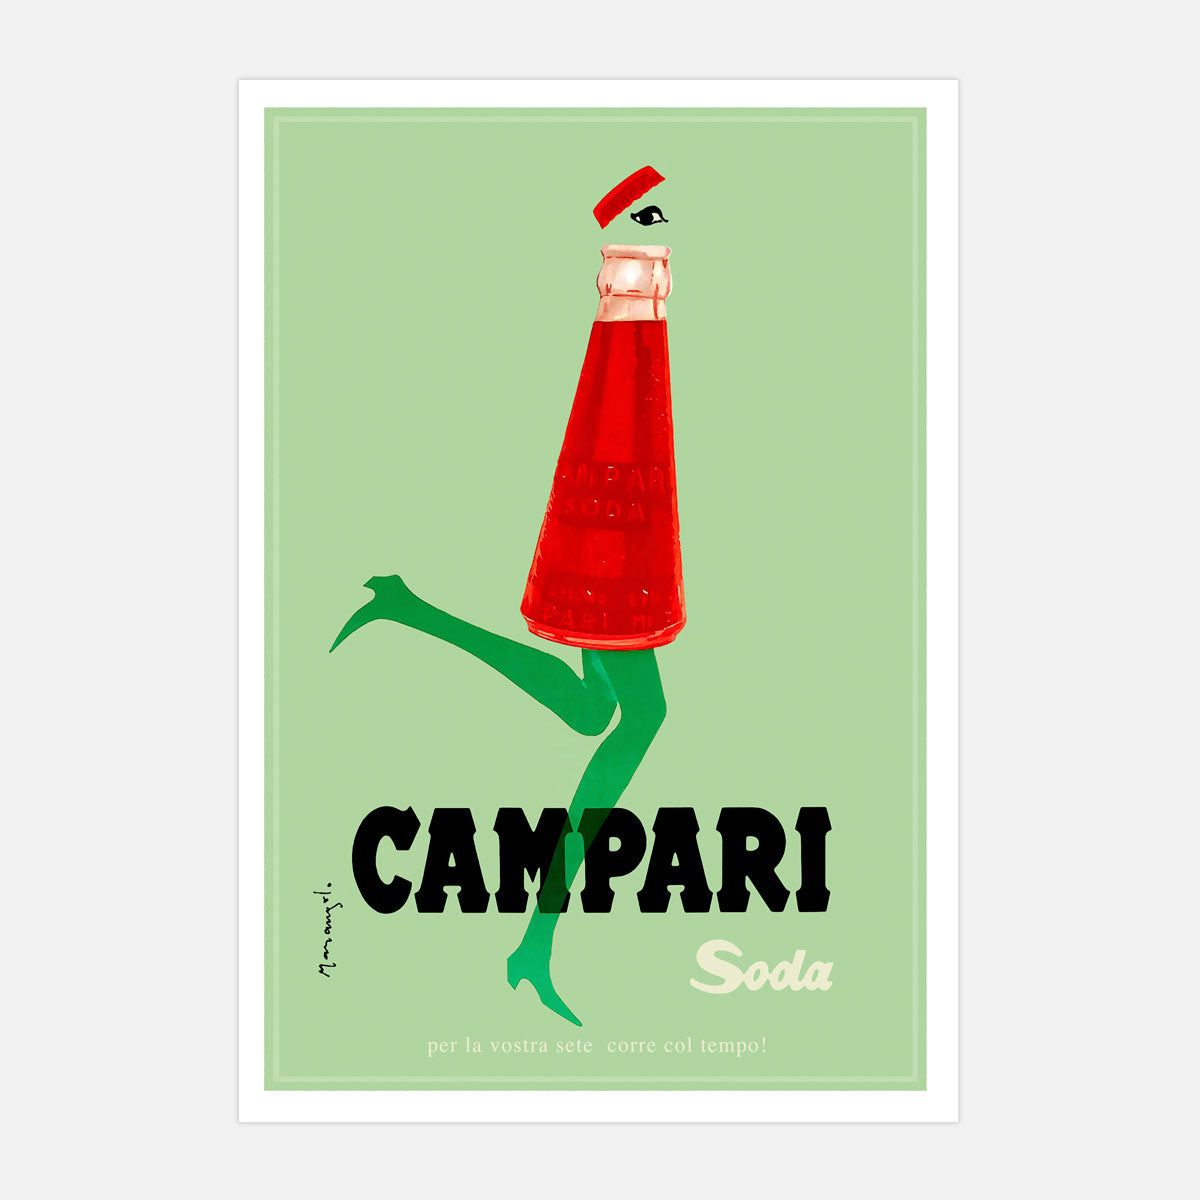 Campari Soda skipping retro vintage print from Places We Luv